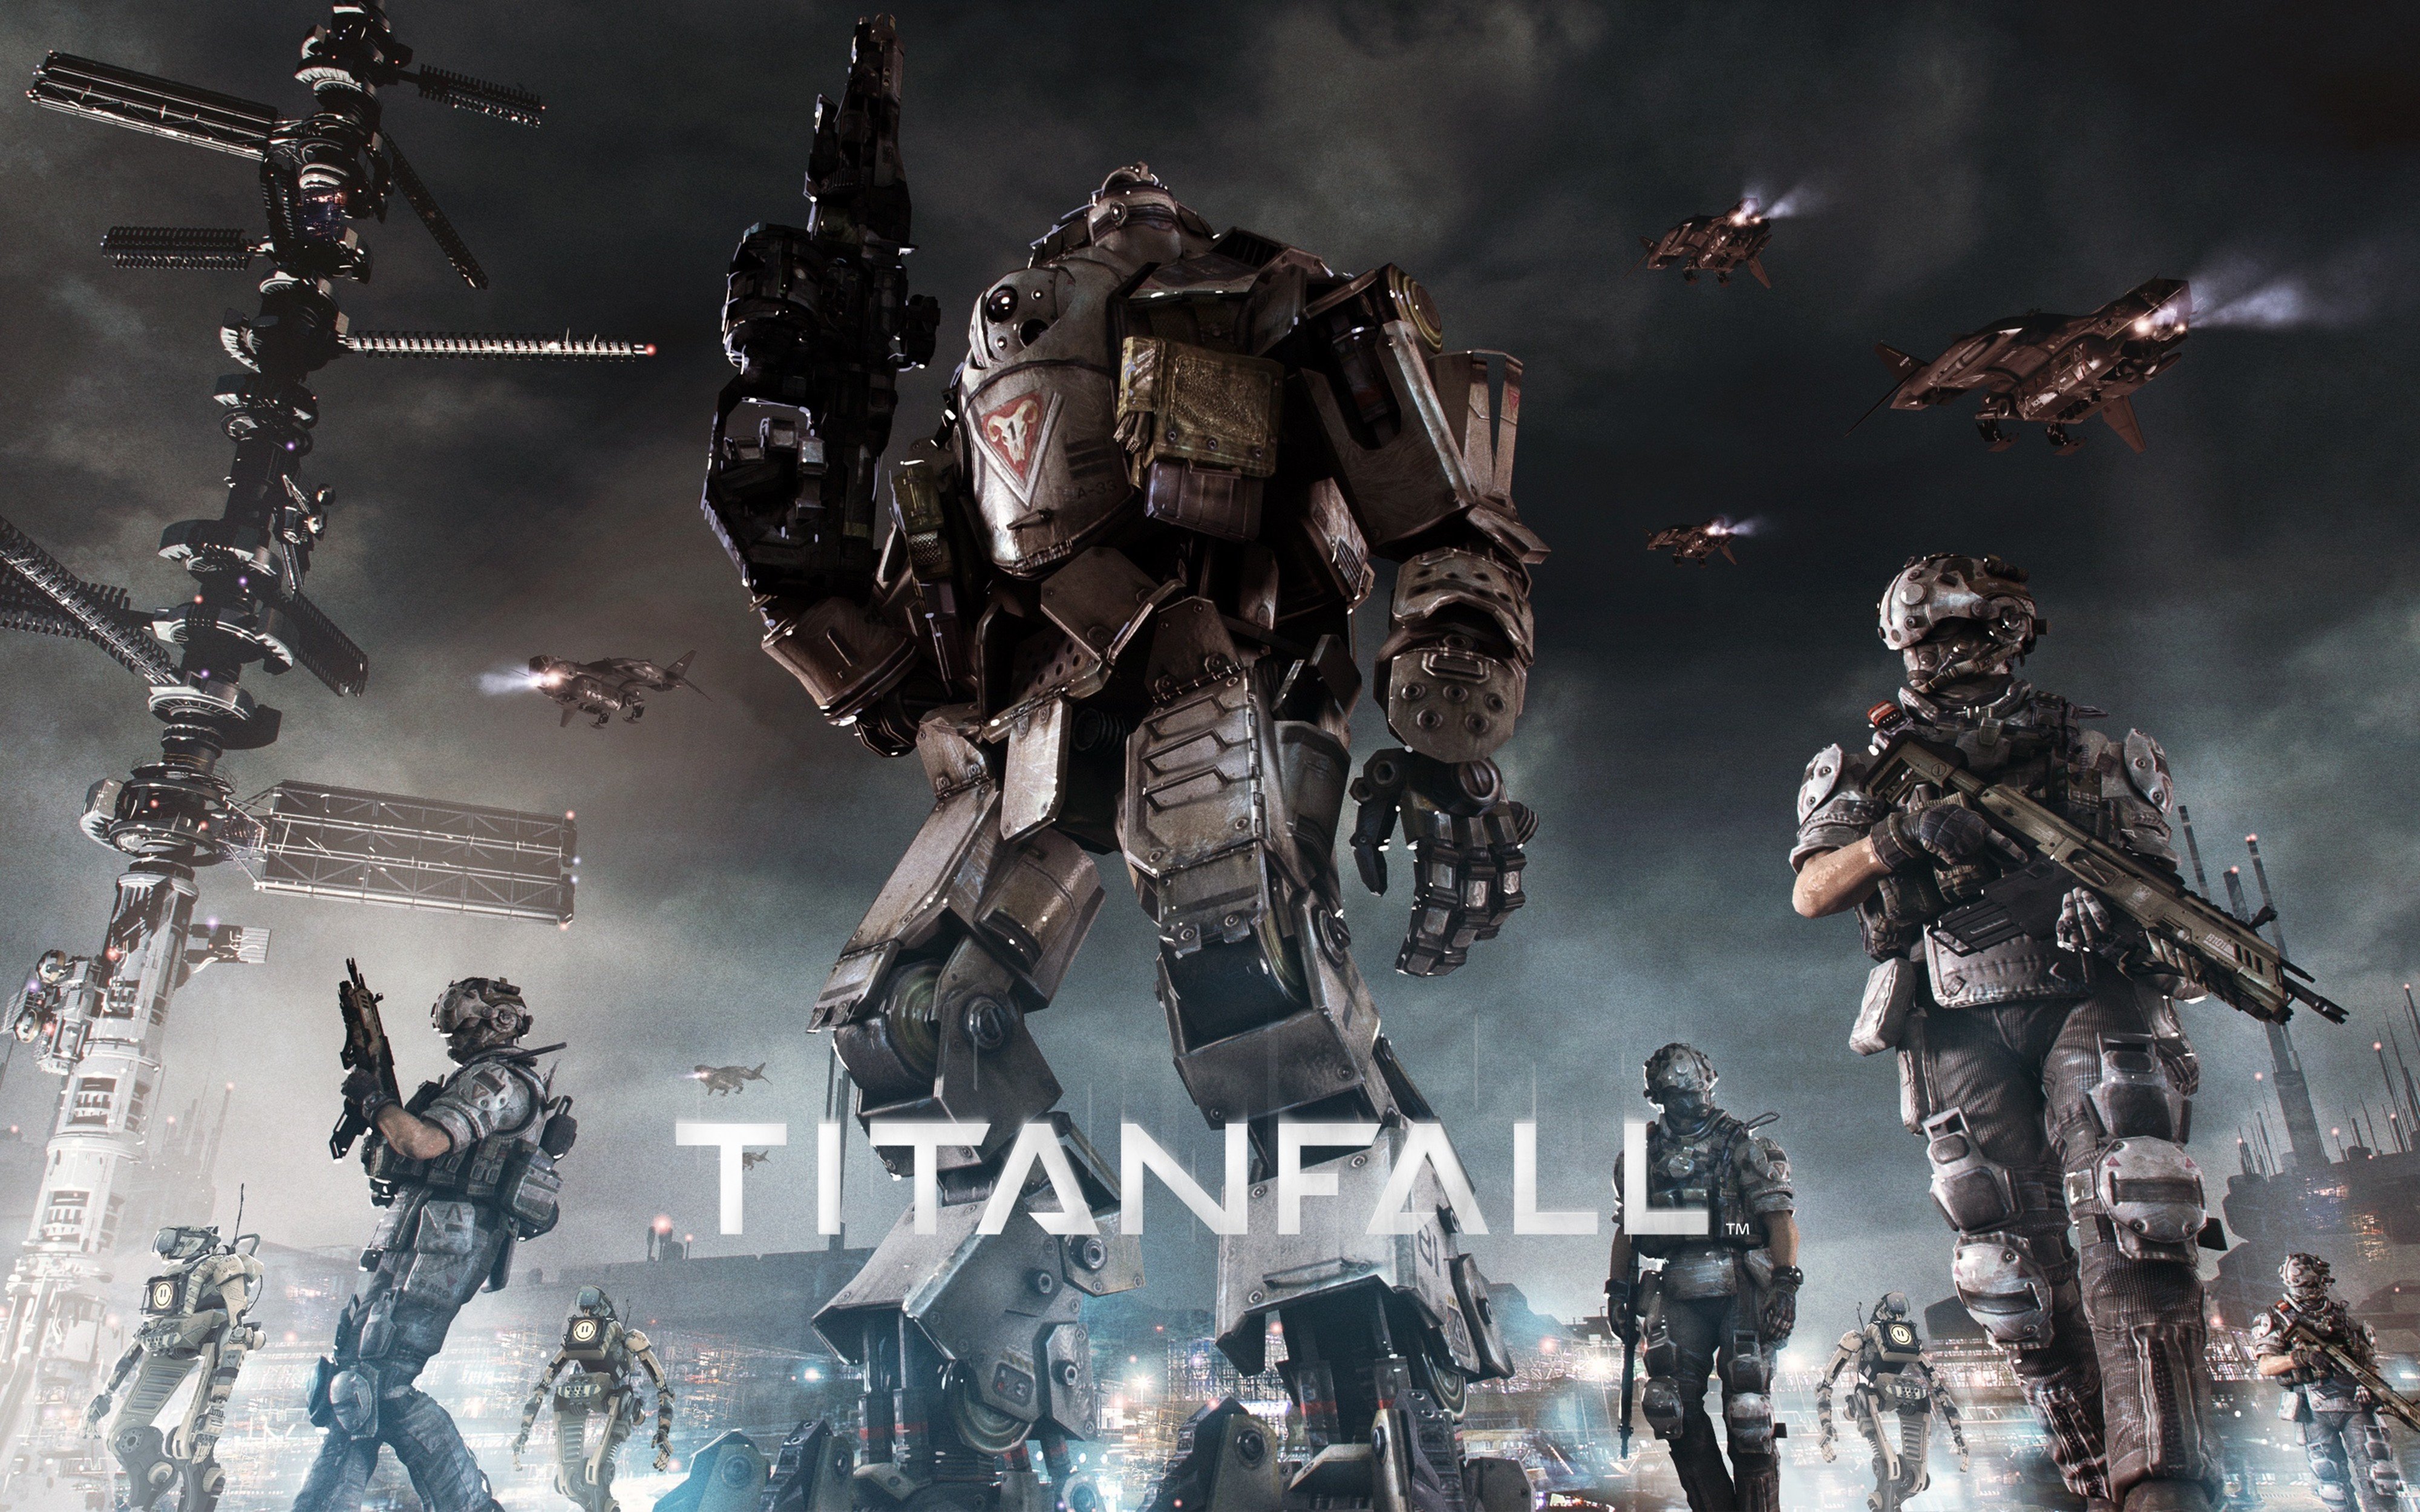 Titanfall Game Sci Fi Future War Battle 4000x2500 Wallpaperx2500